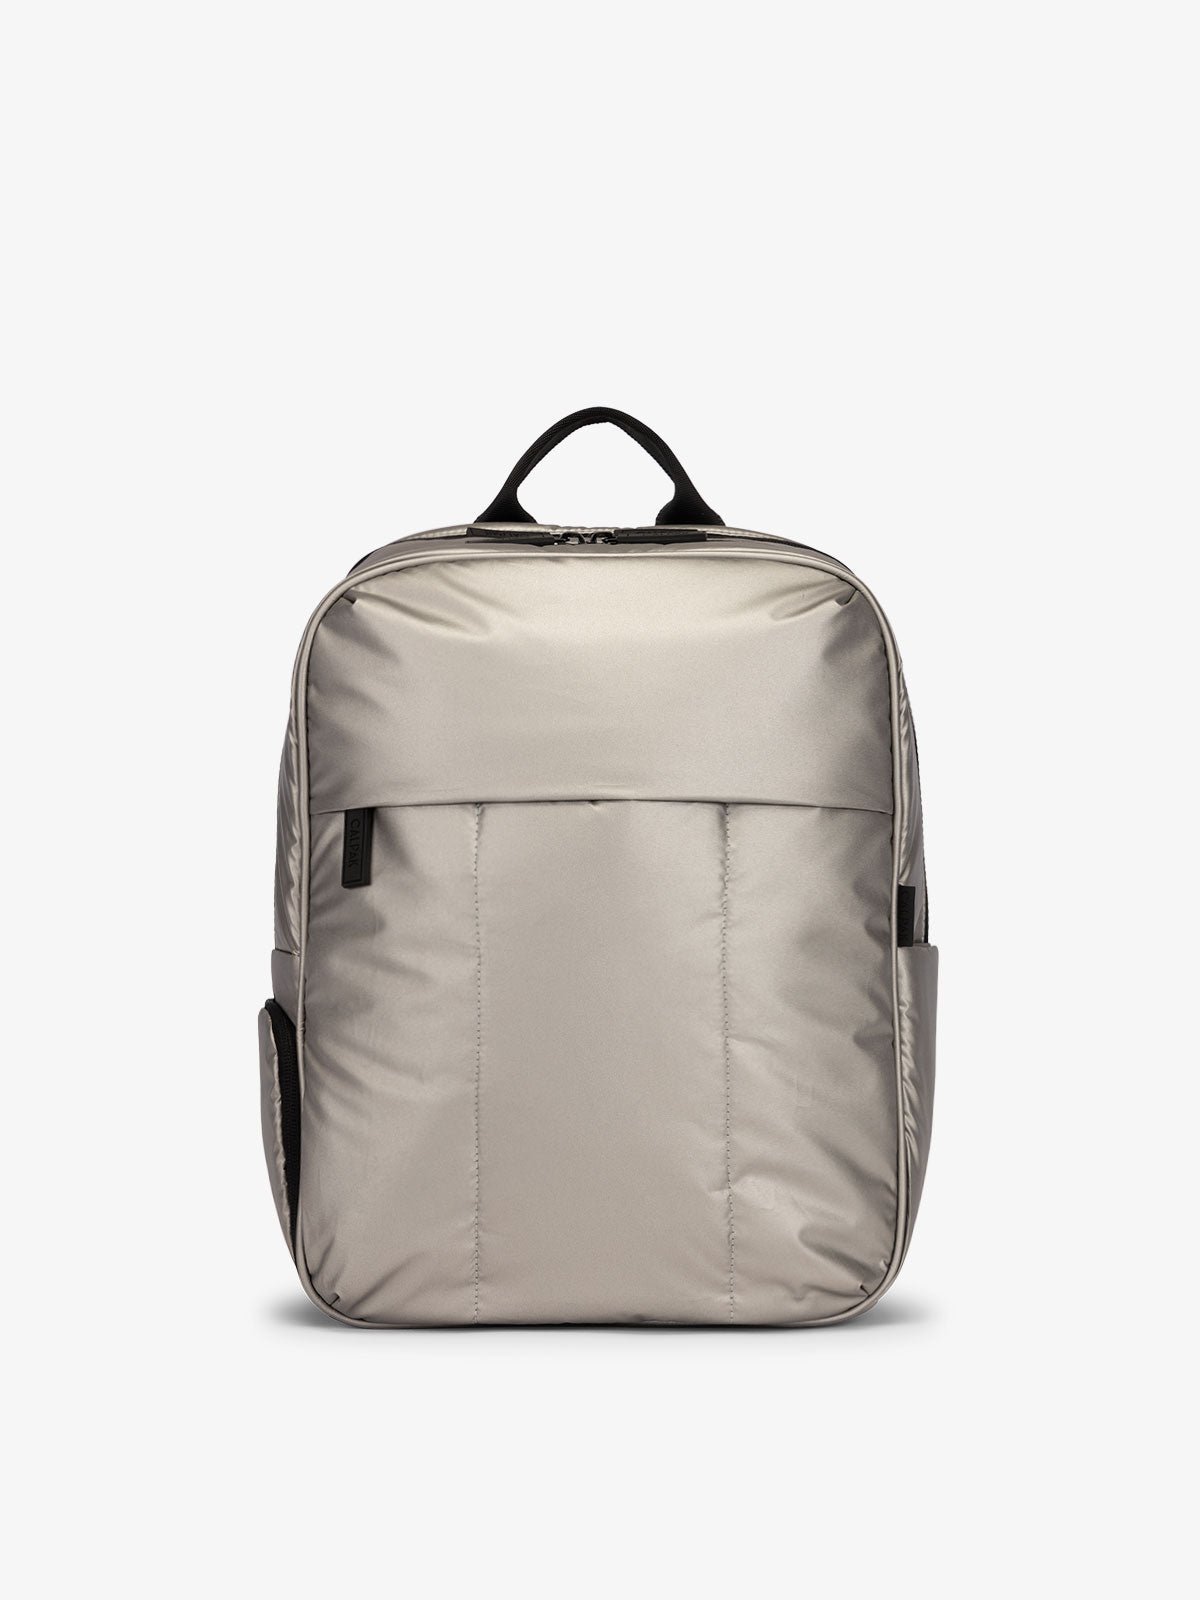 CALPAK Luka Laptop Backpack for school in metallic silver